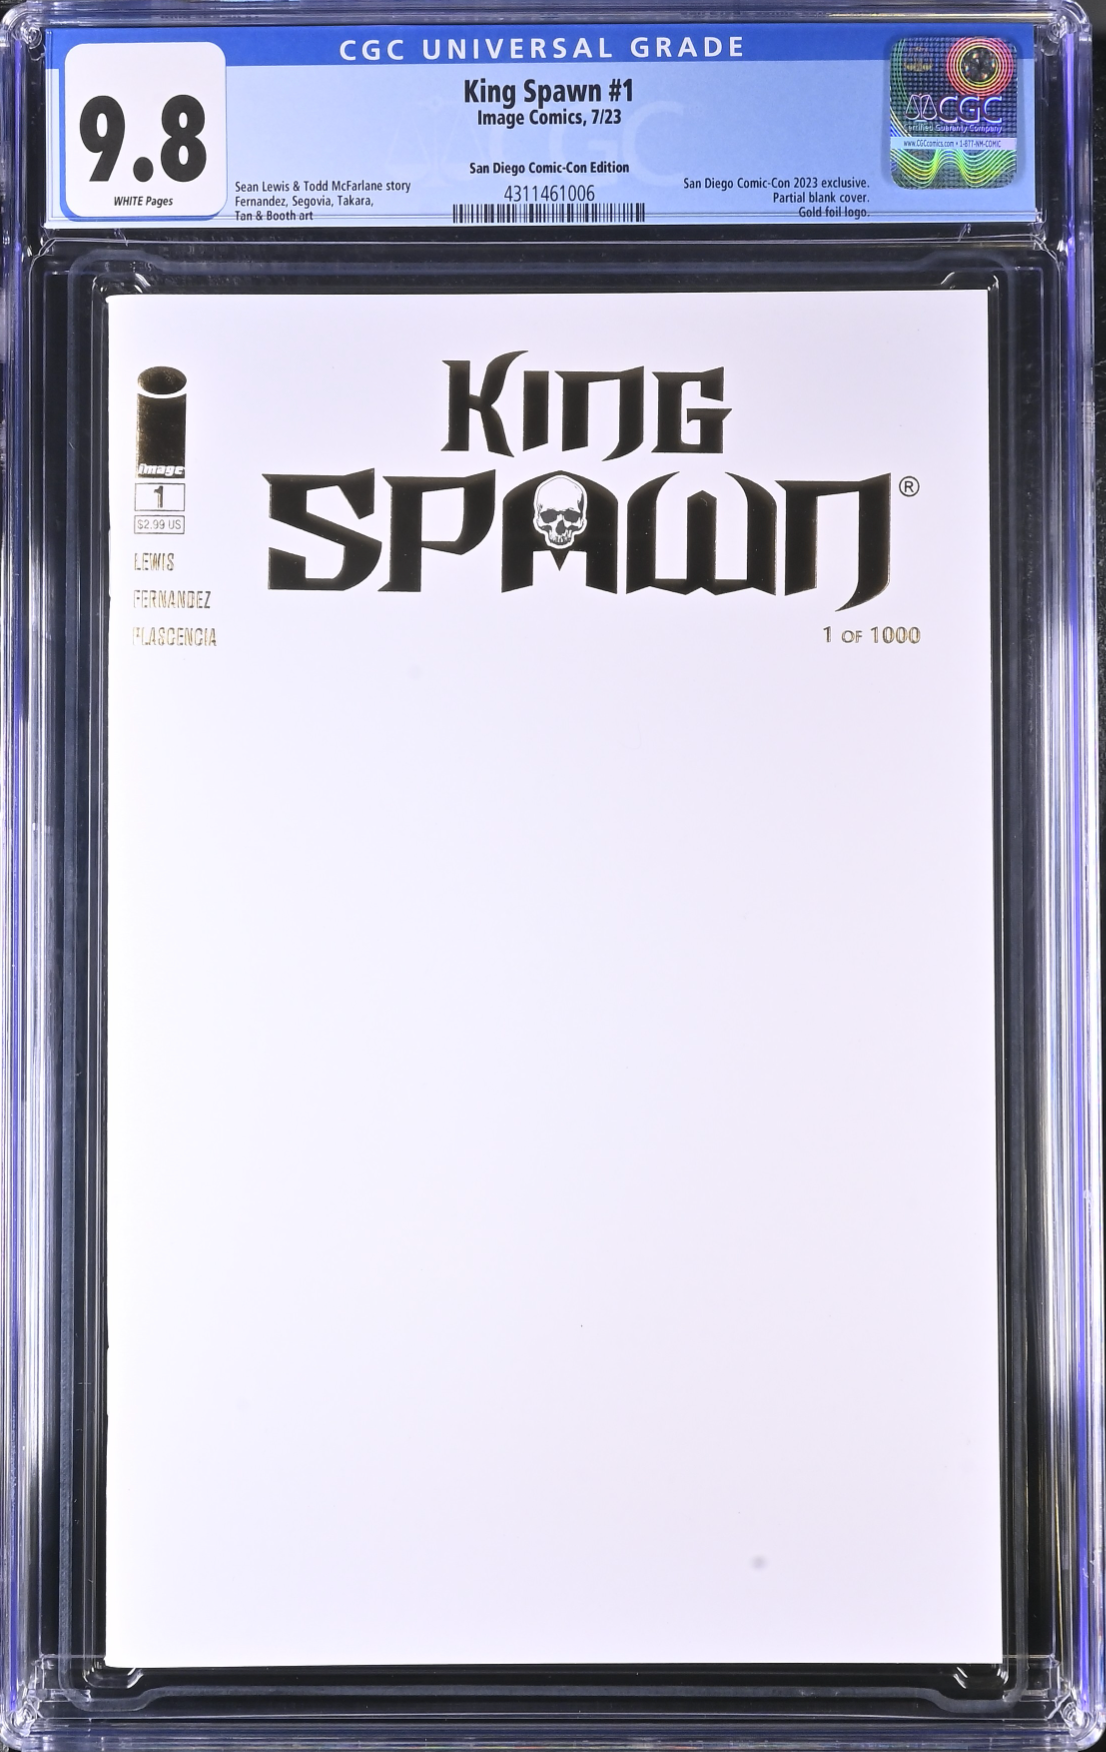 King Spawn #1 SDCC Gold Foil Blank Sketch Variant CGC 9.8